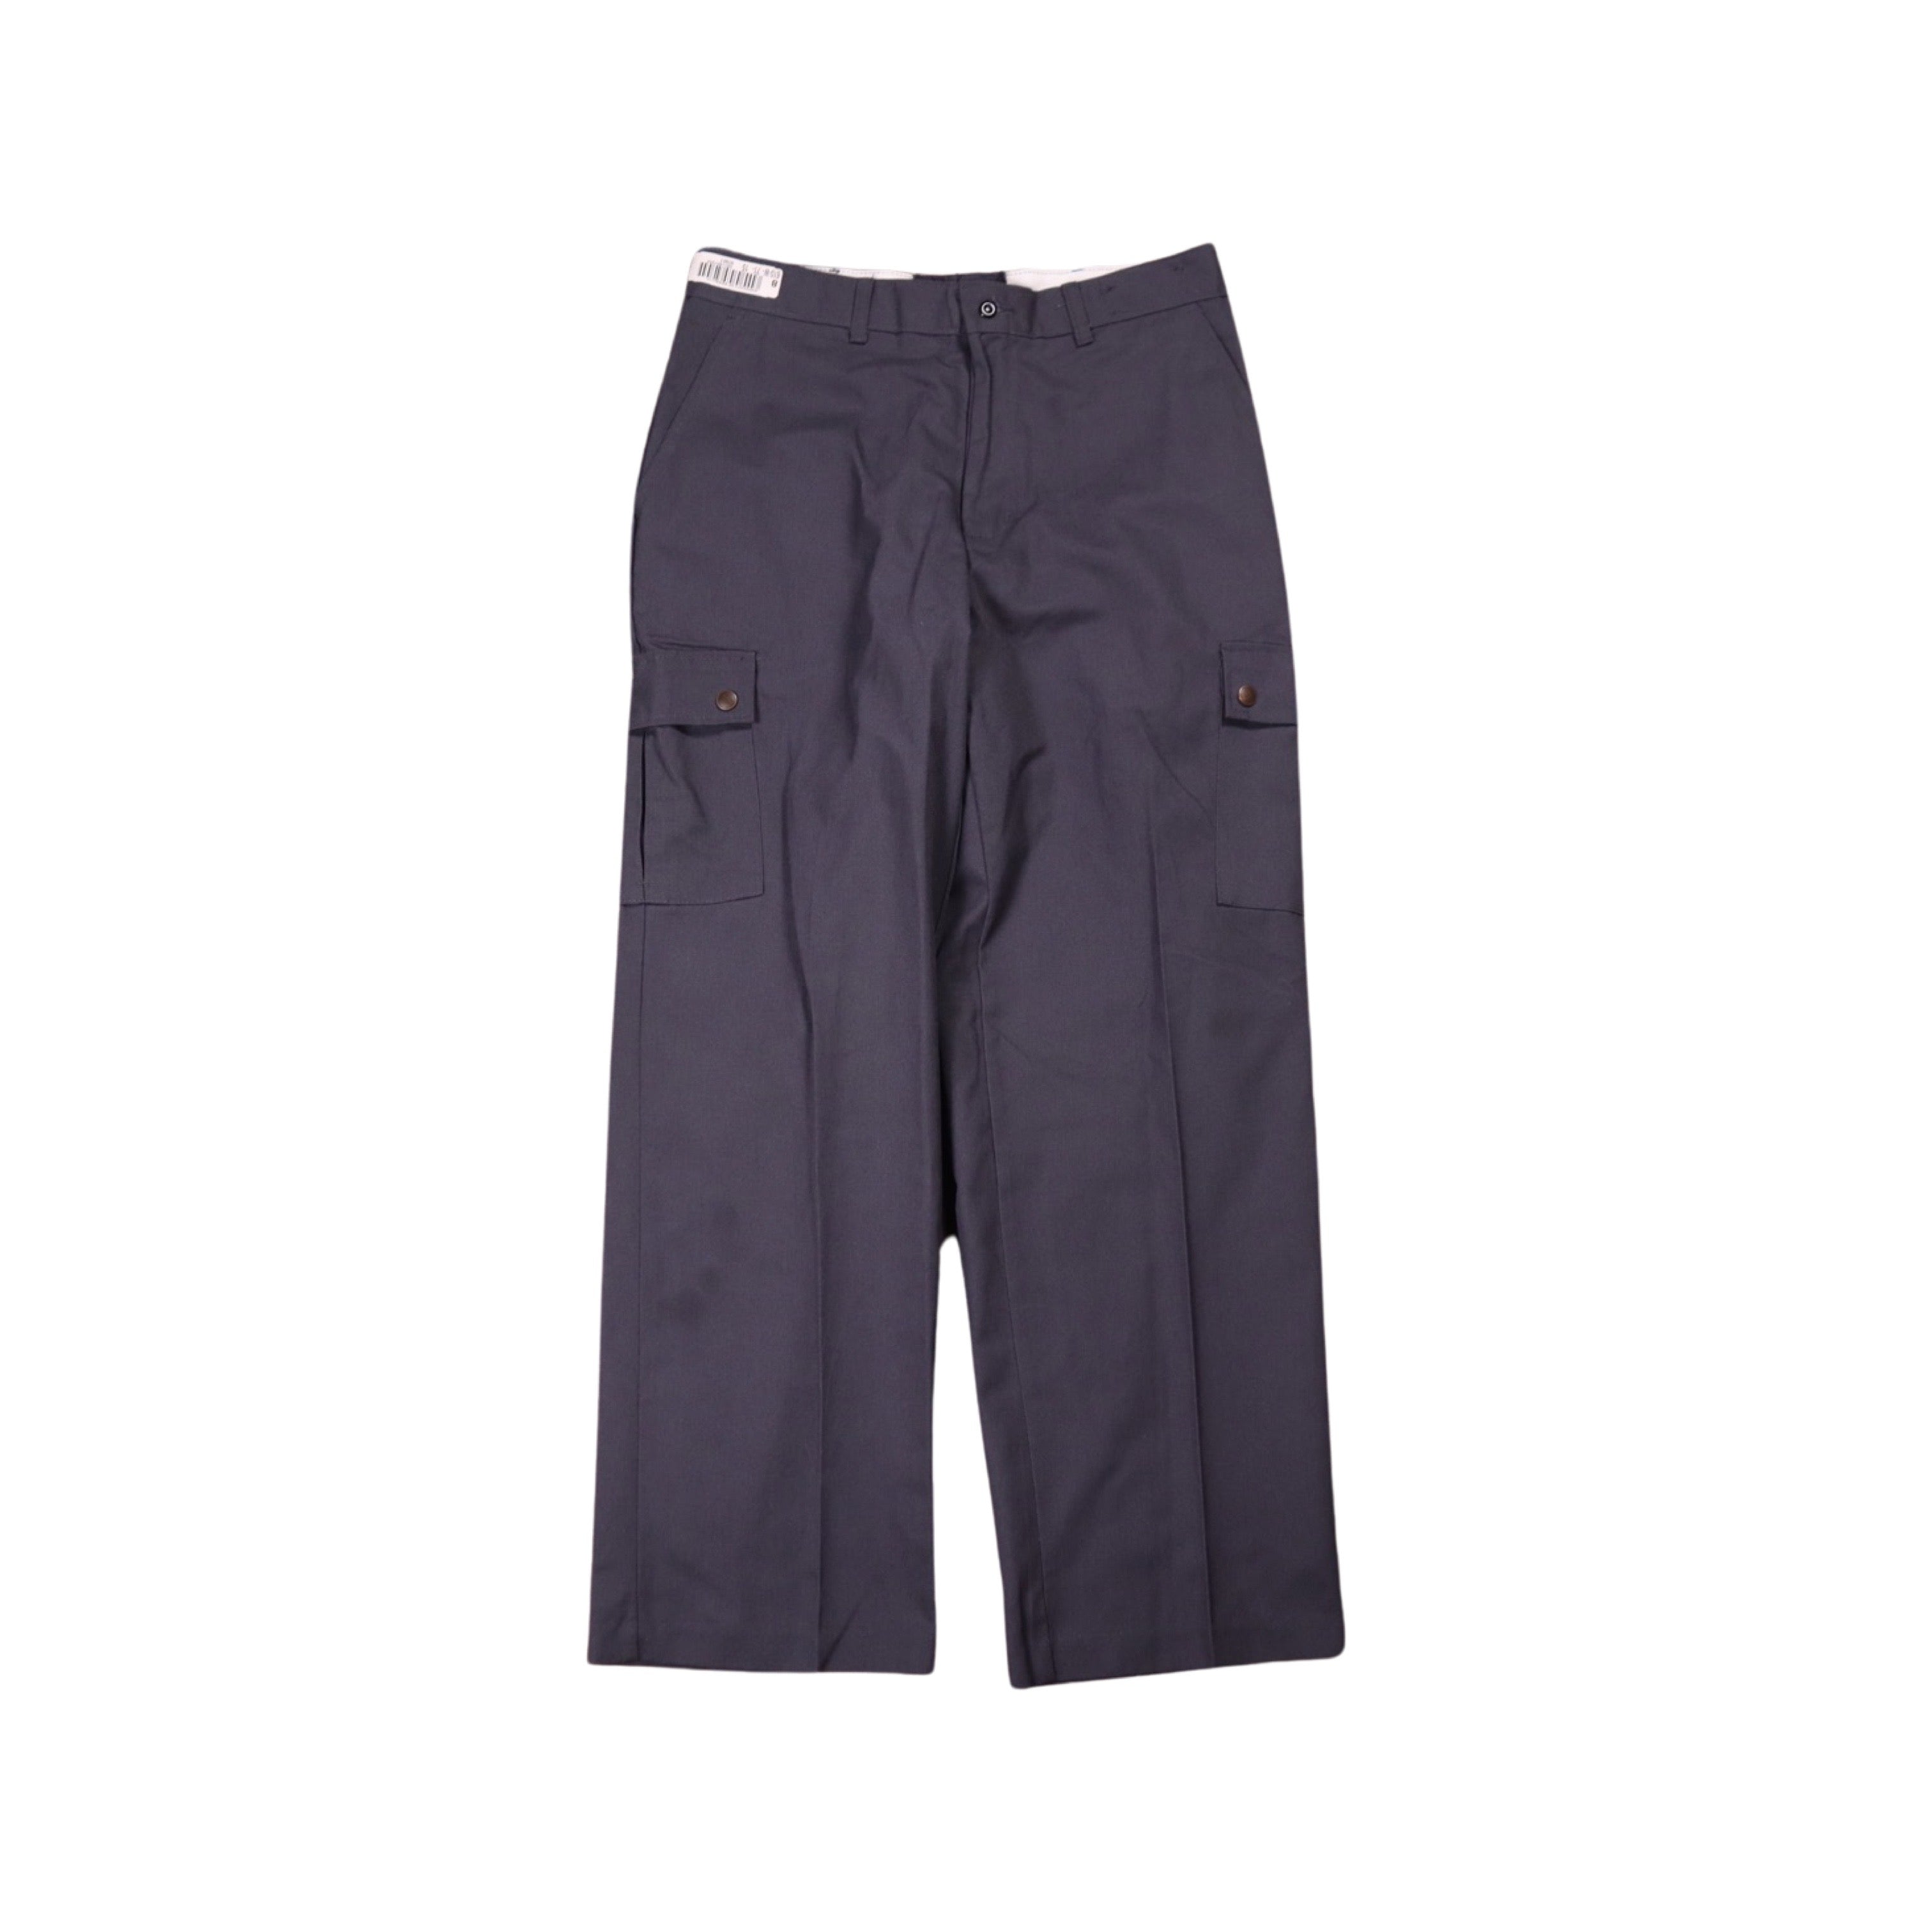 Gray Cargo Pants (33”)